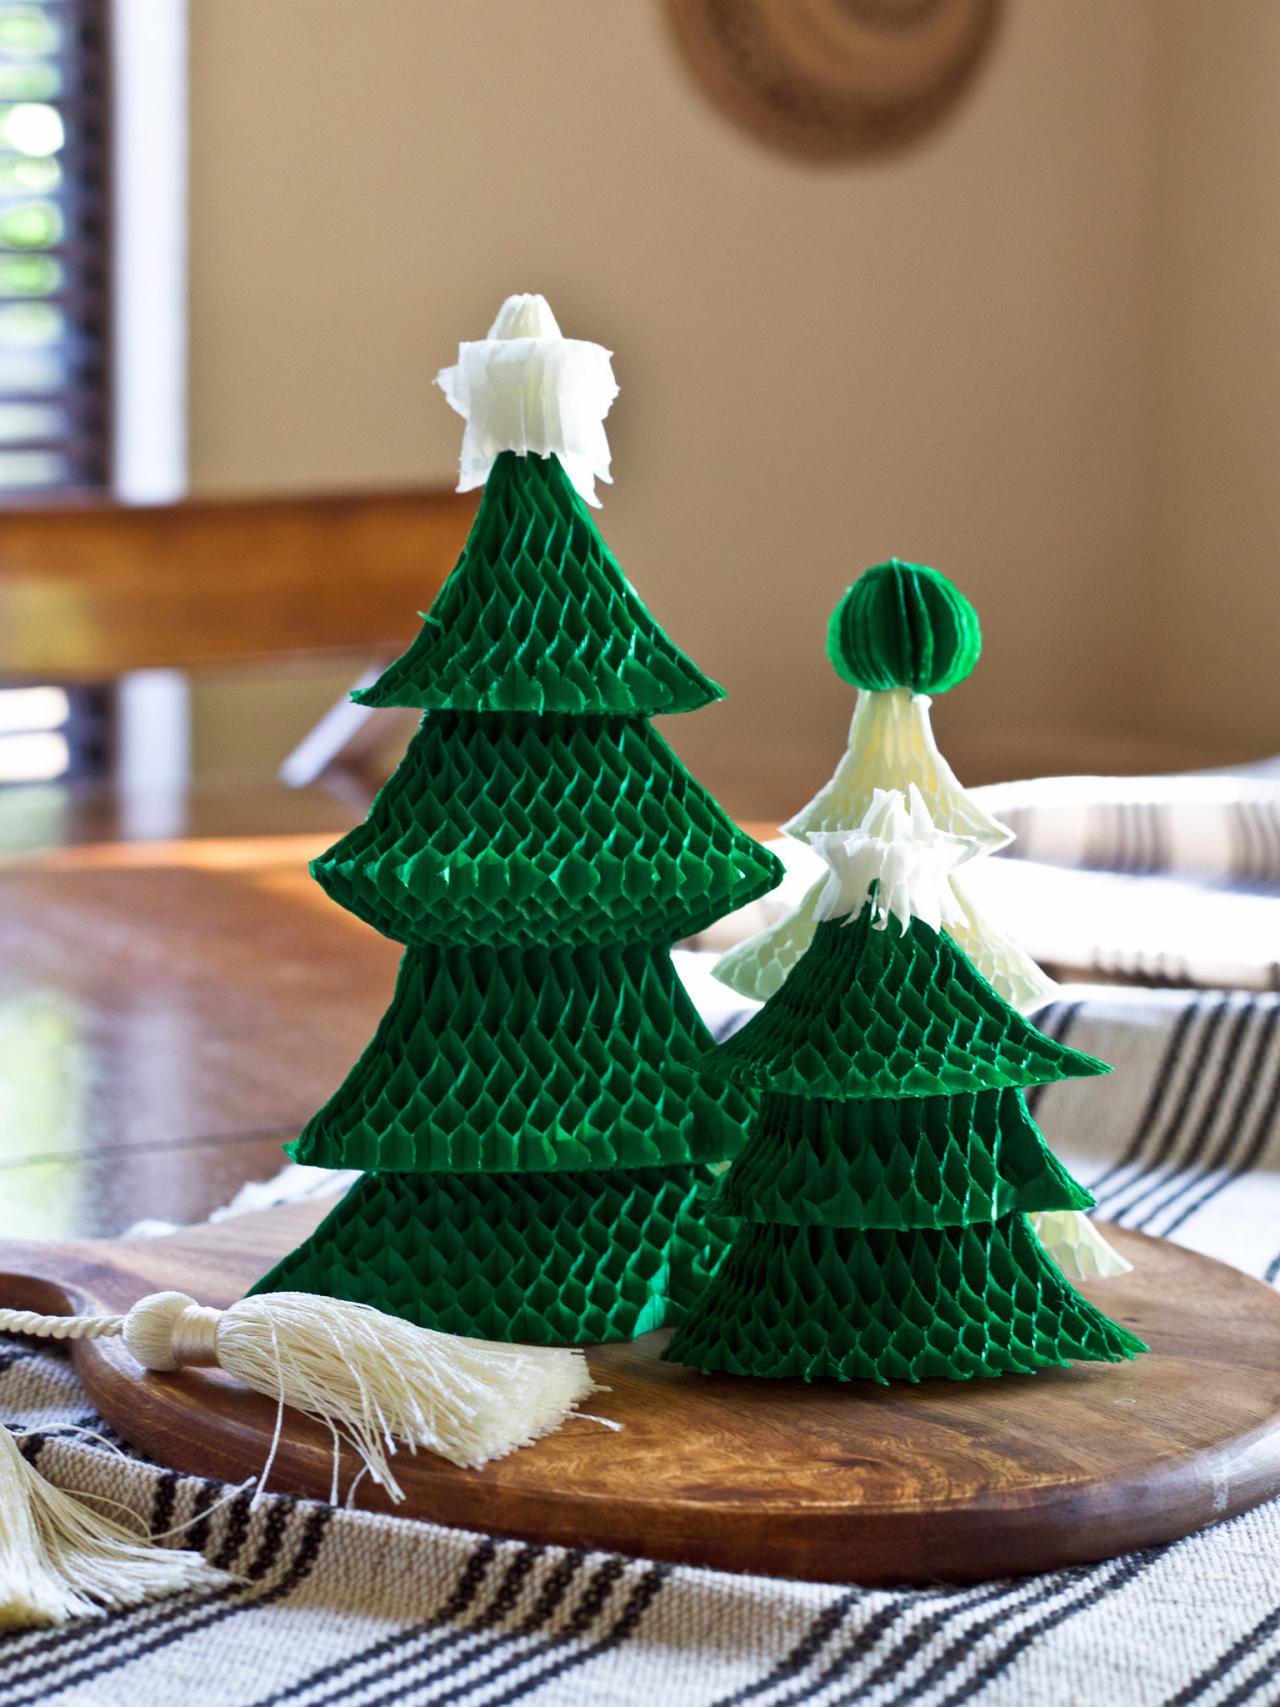 How to Make an Easy Christmas Tree Centerpiece | HGTV